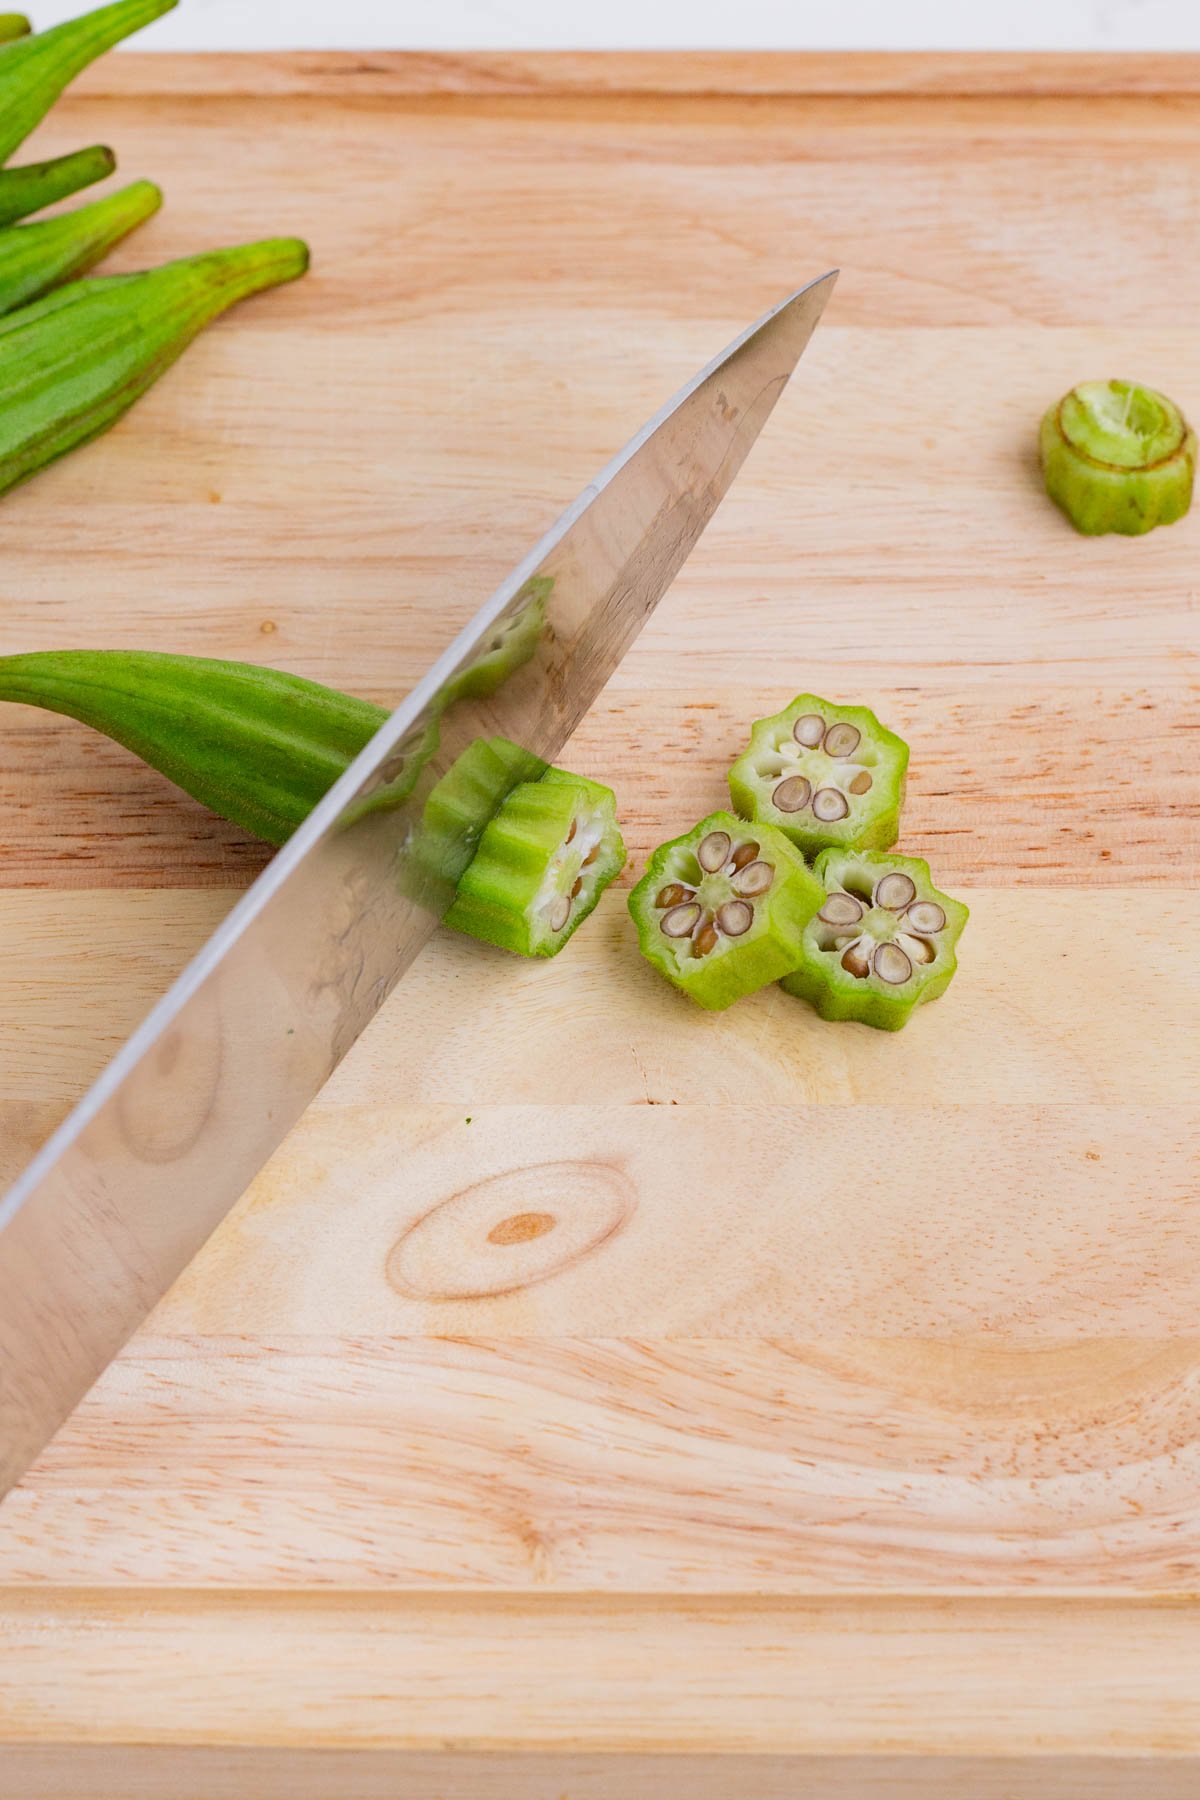 A sharp knife slices an okra pod.